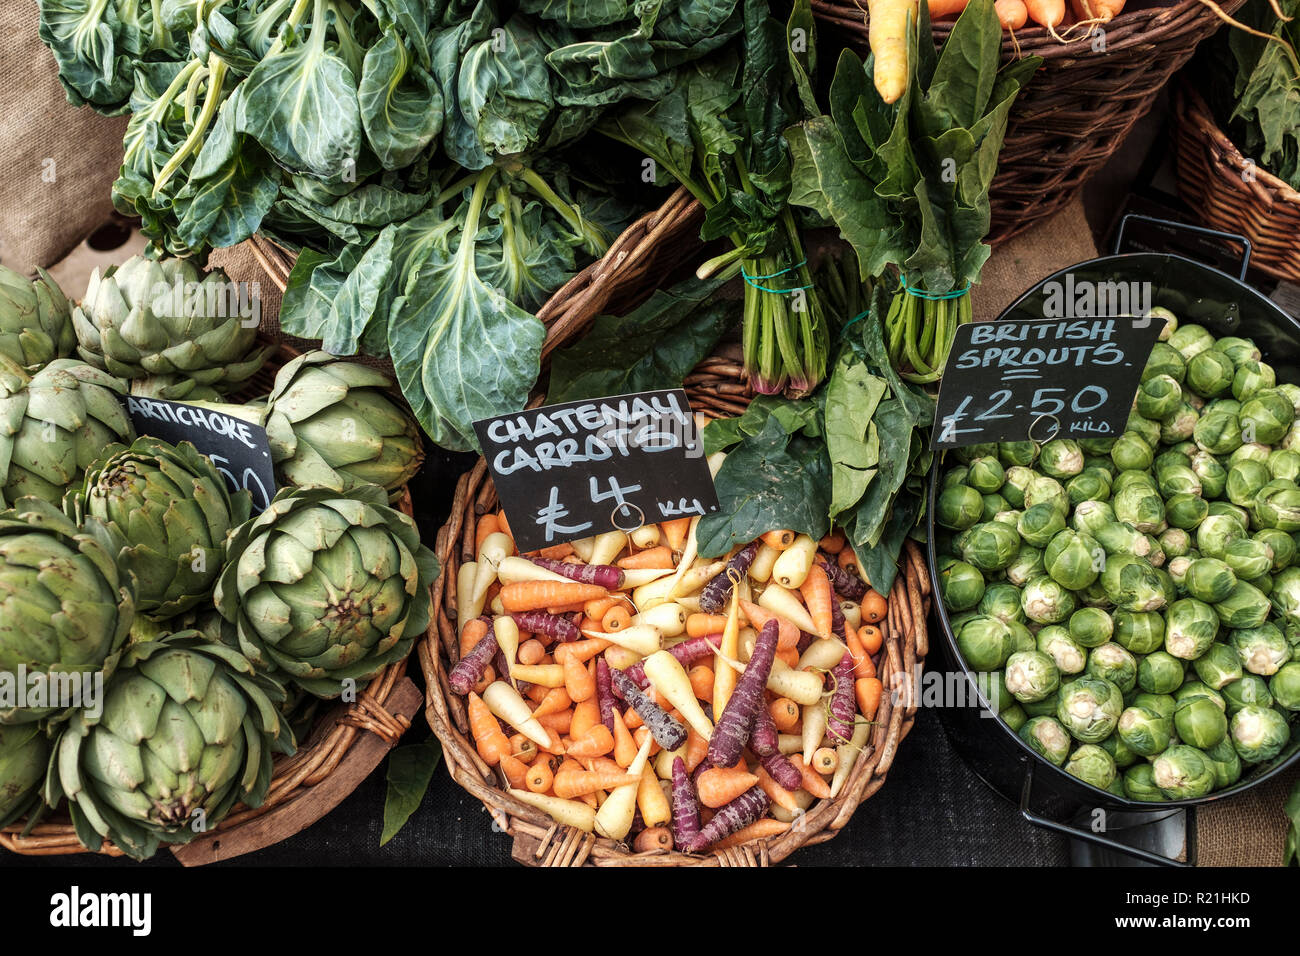 England, London, Borough Market-Organic vegetables on display. Stock Photo